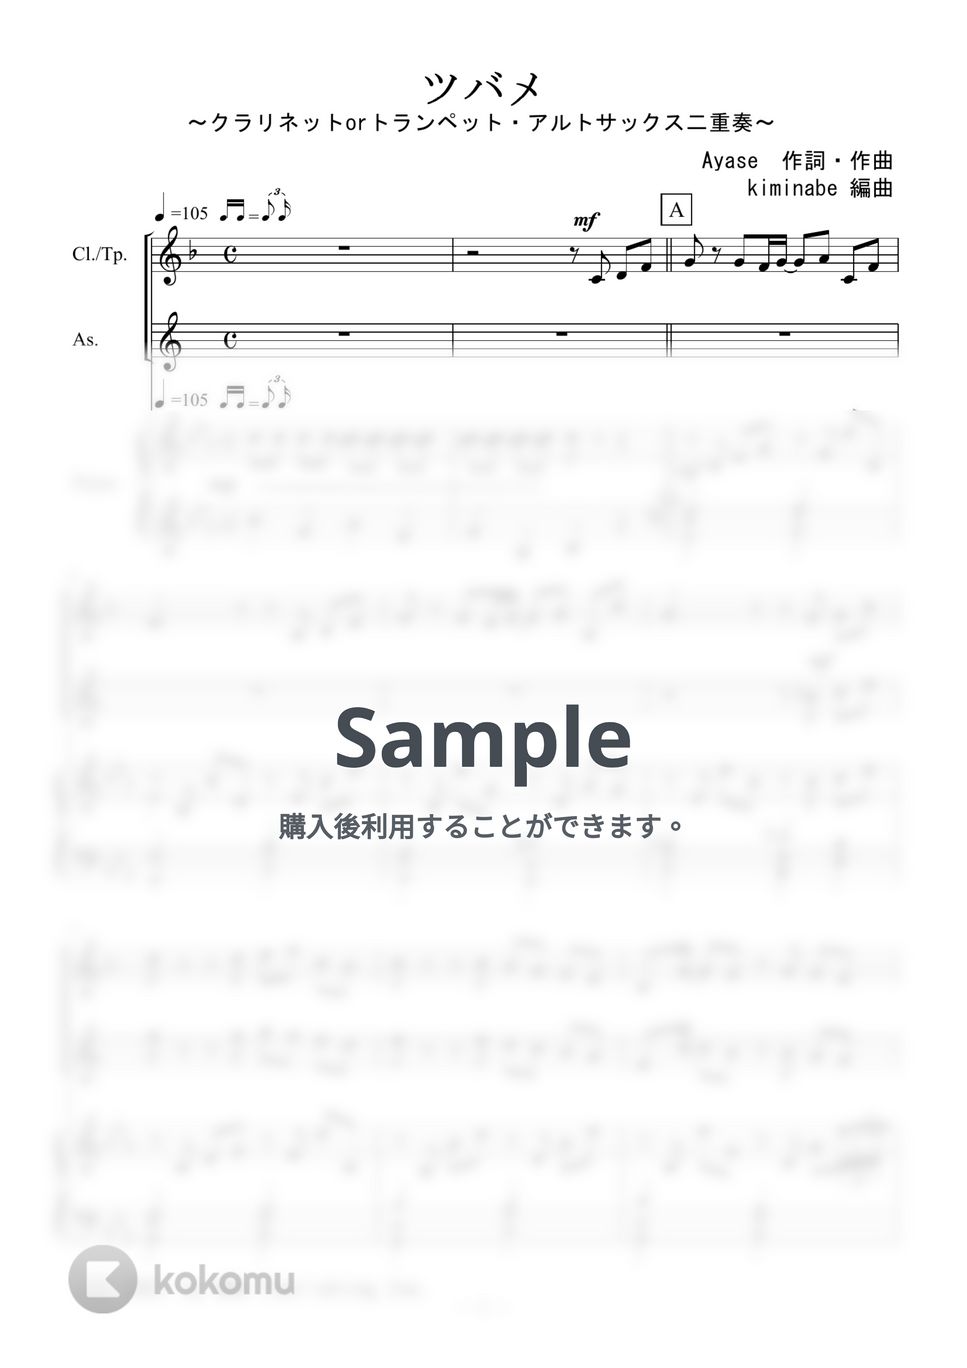 YOASOBI - ツバメ (クラリネットorトランペット・アルトサックス二重奏) by kiminabe